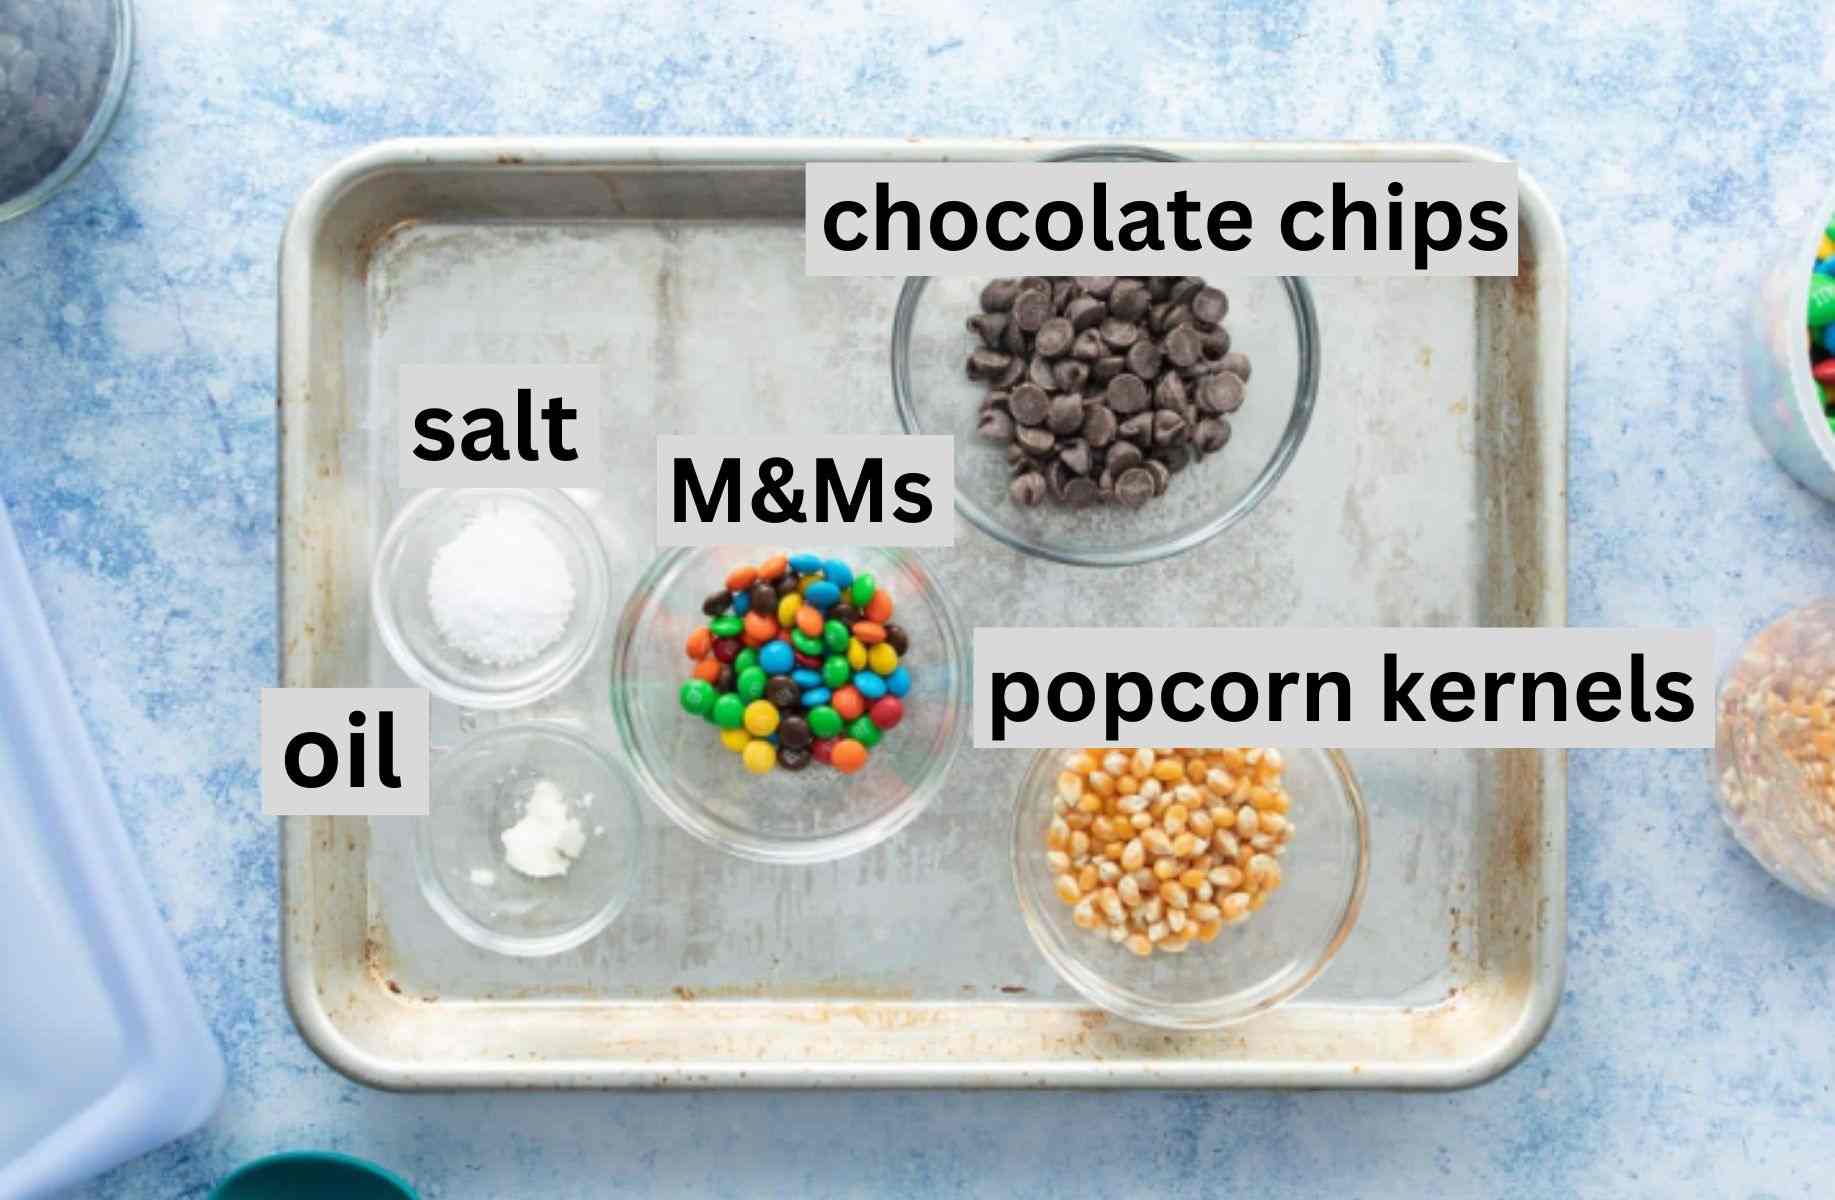 chocolate chips, popcorn kernels, m&ms, salt on baking tray